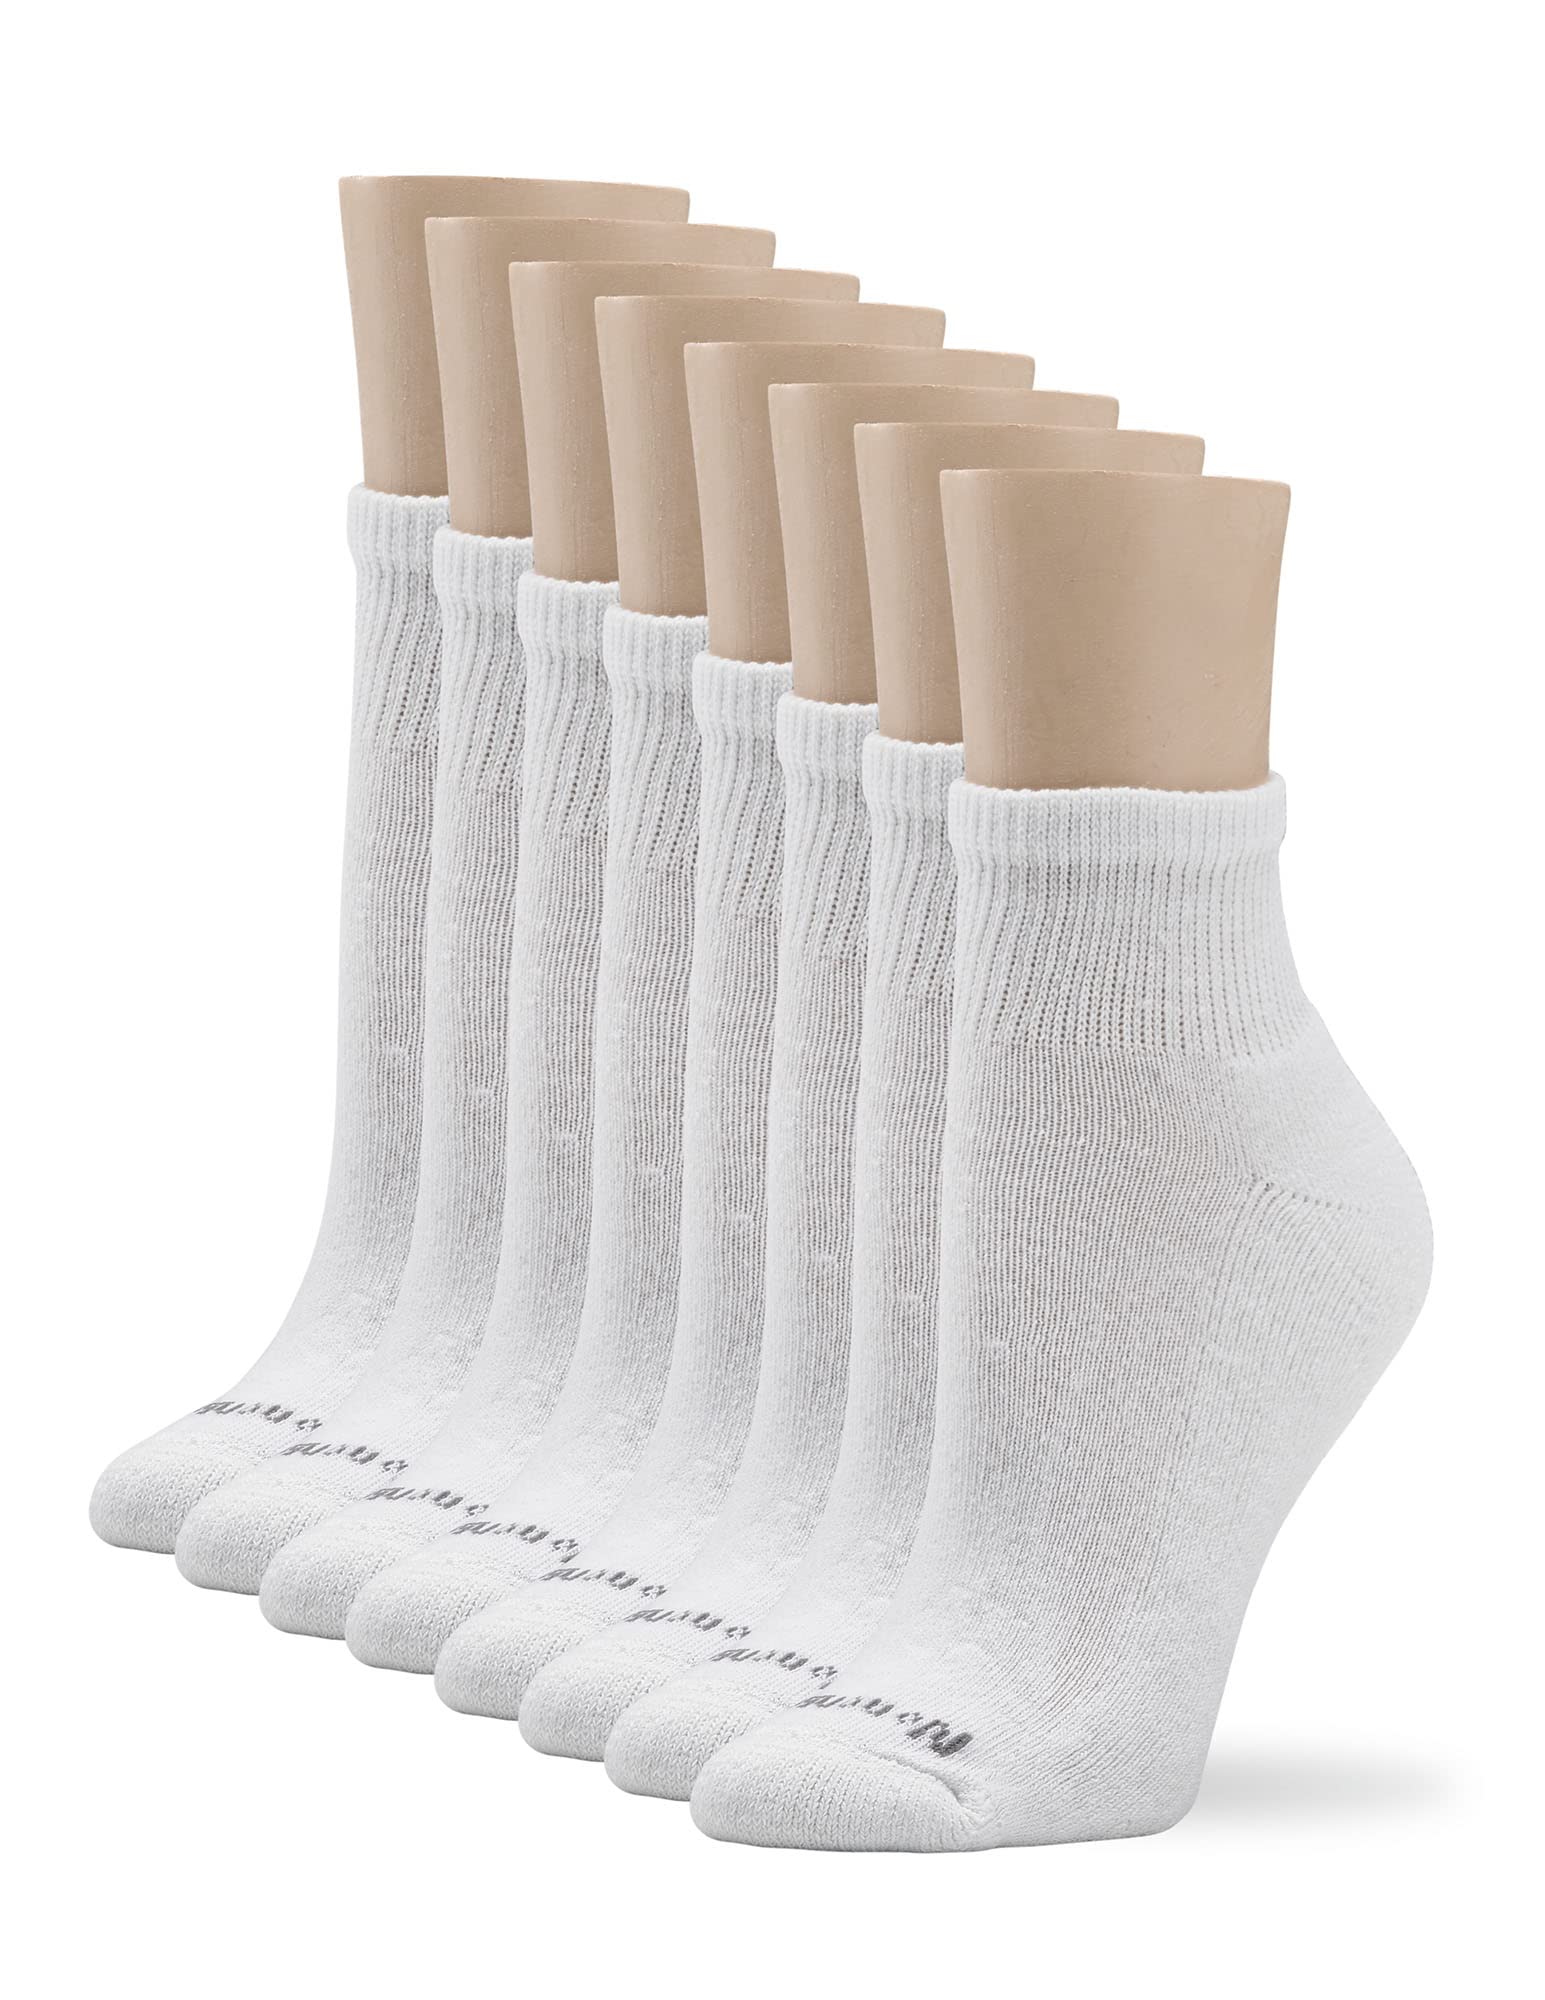 No nonsense womens Cushion Quarter Top 8 Pair Pack Liner Socks, White, One Size US